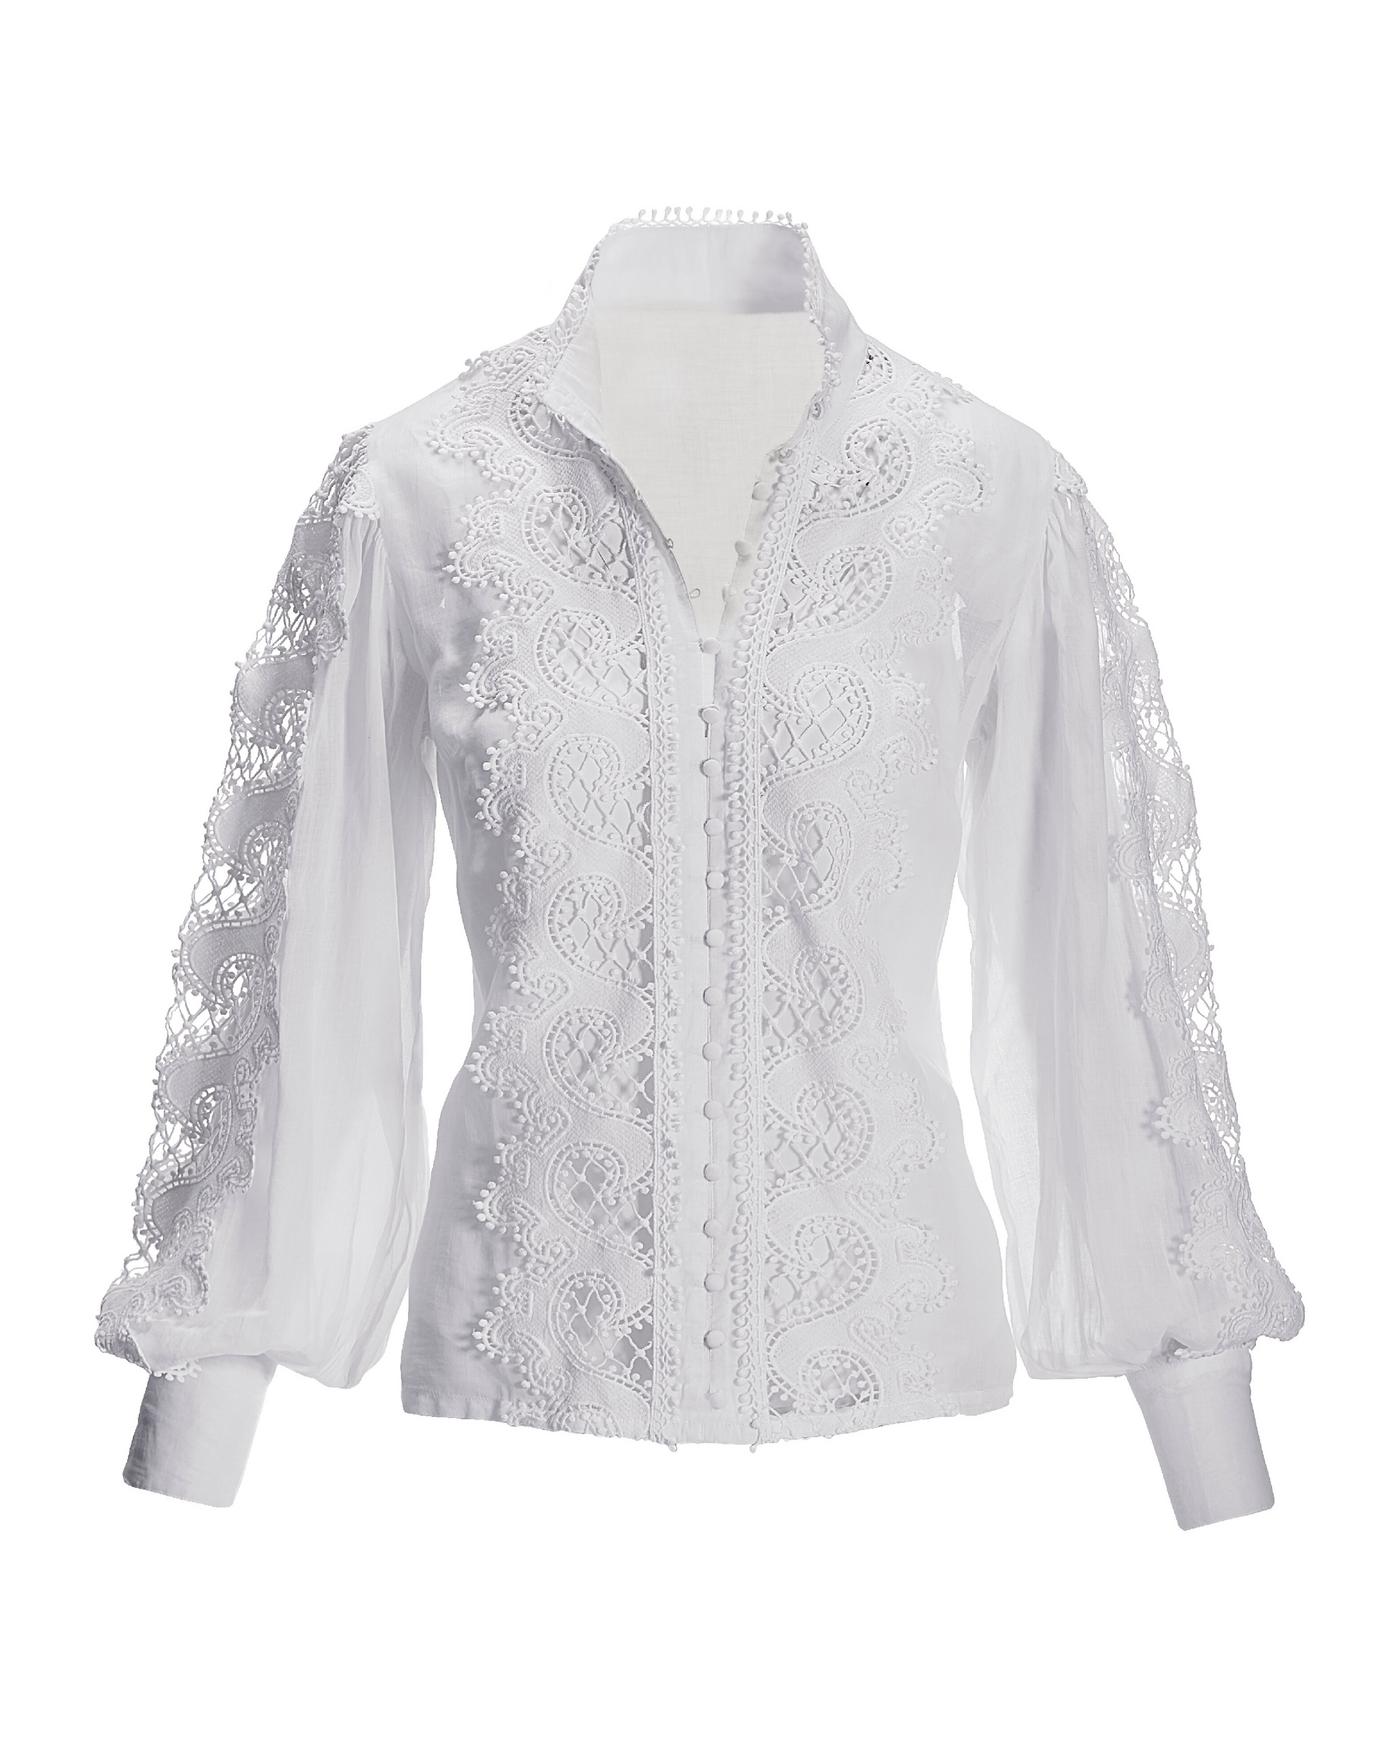 | - Sleeve Boston Proper Drama Inset Lace White Shirt